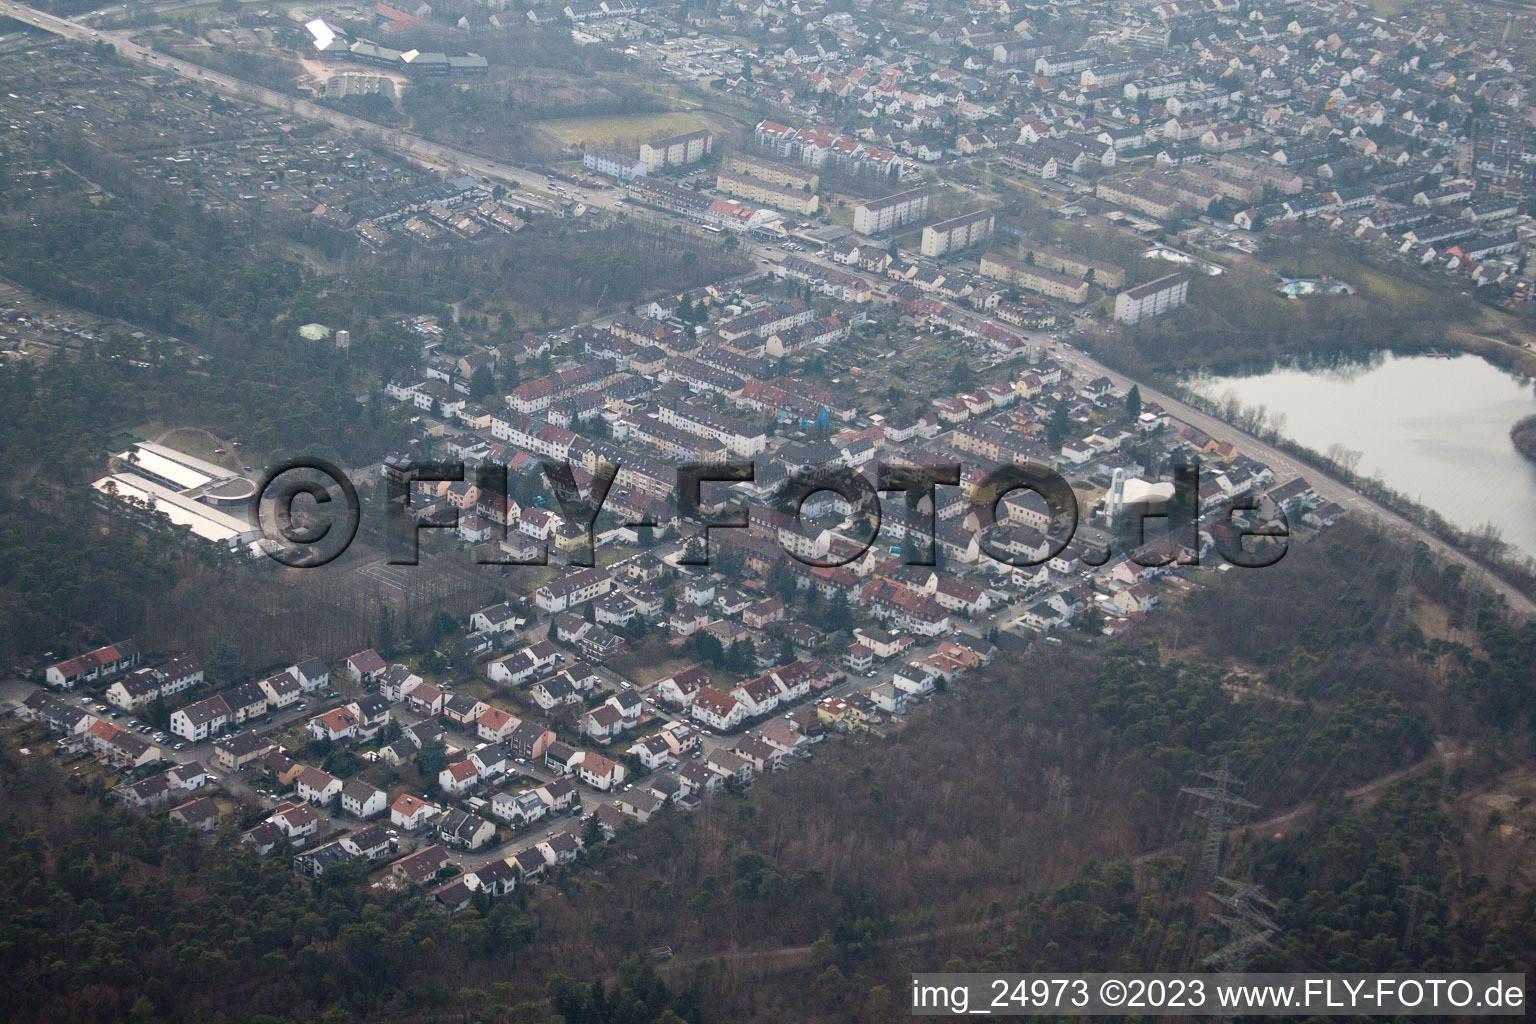 Quartier Rheinau in Mannheim dans le département Bade-Wurtemberg, Allemagne vue du ciel